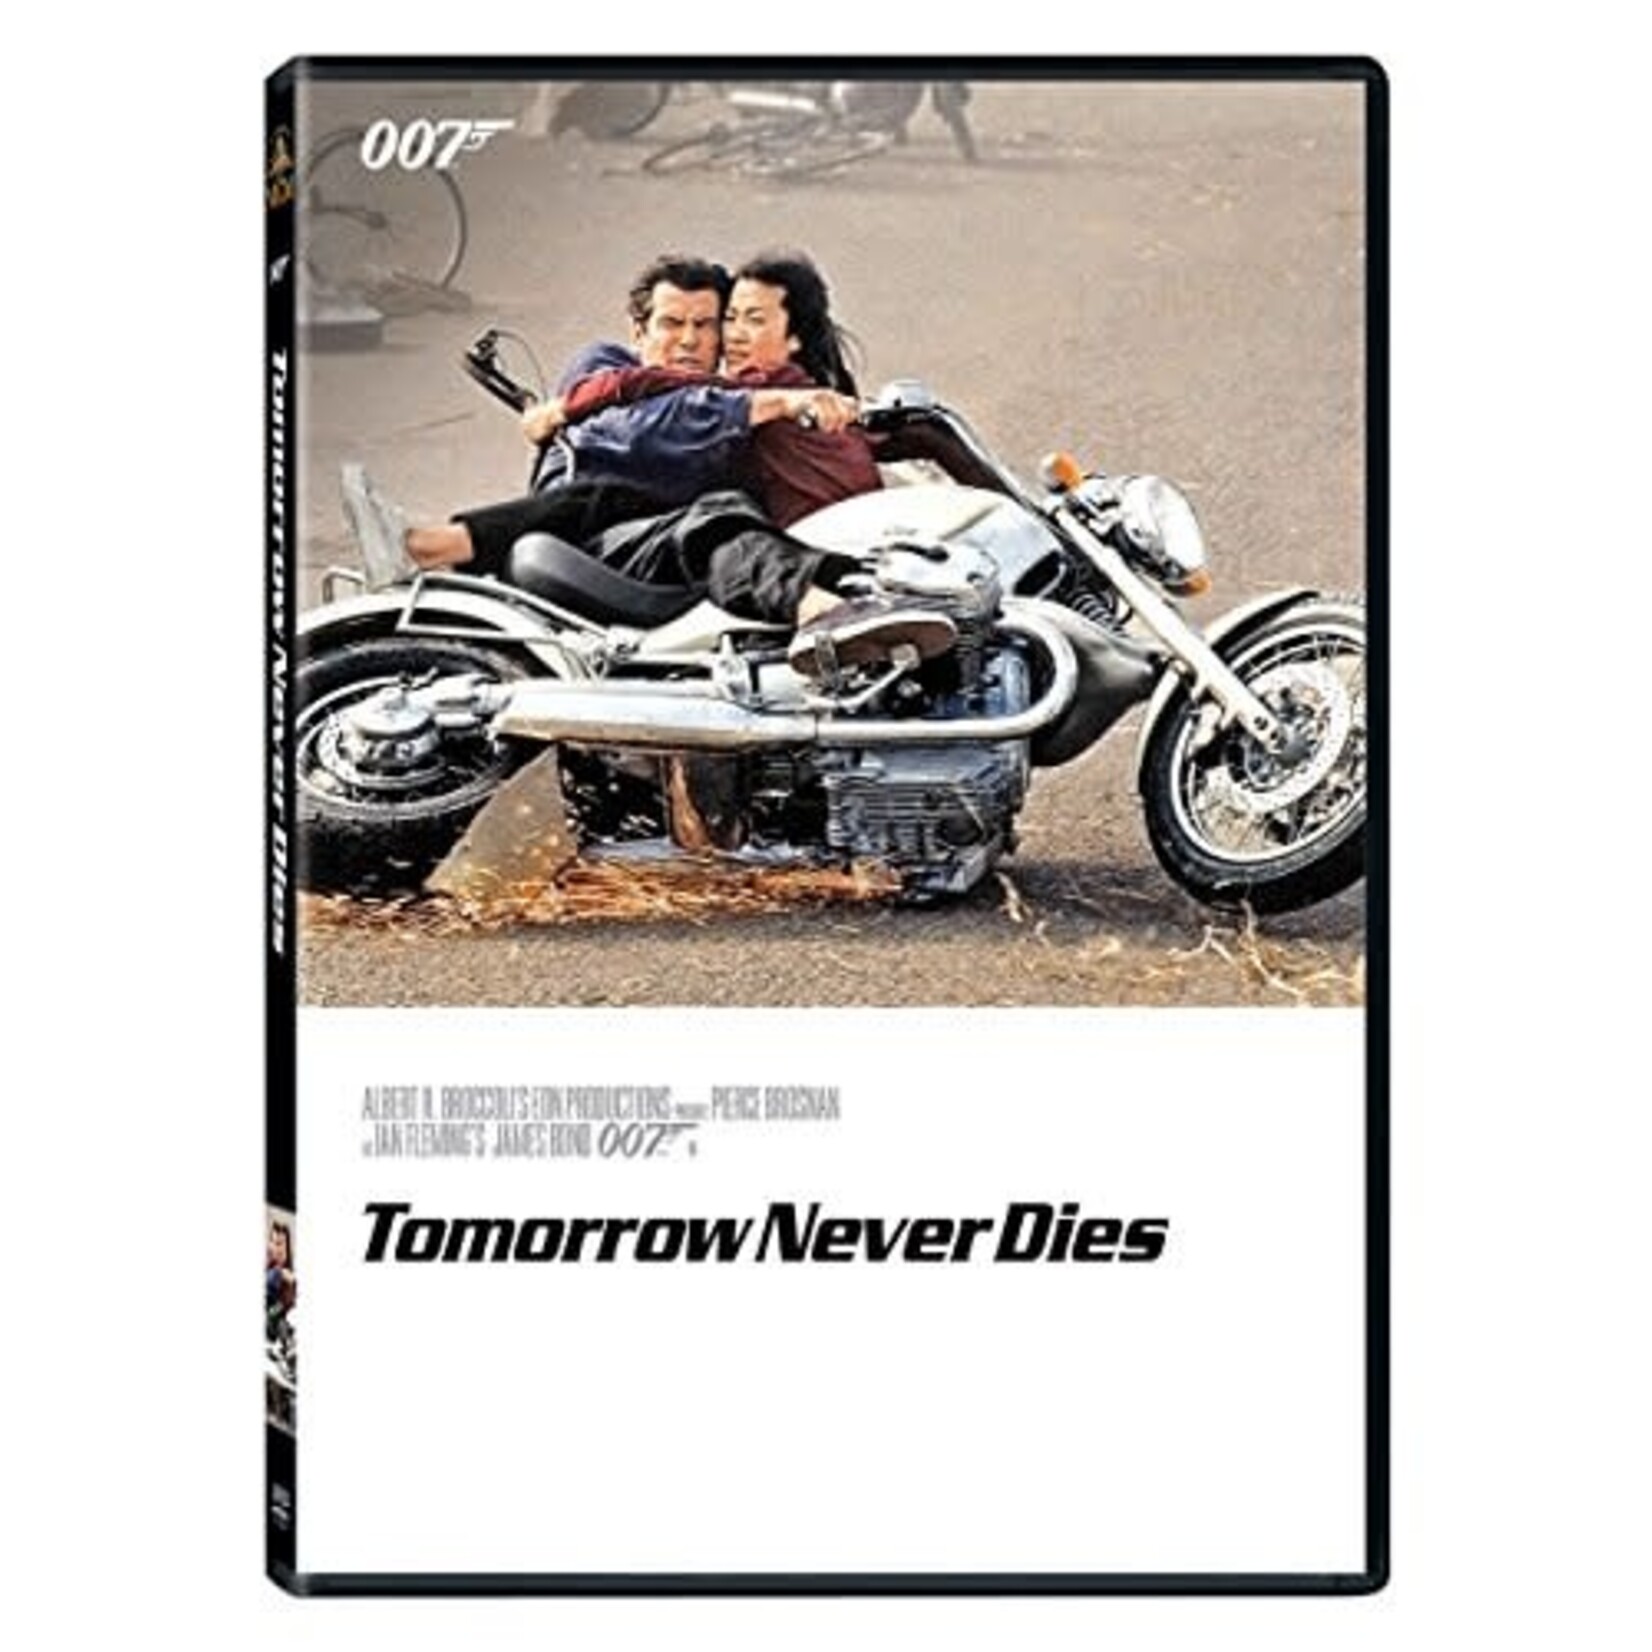 James Bond 007 - Tomorrow Never Dies (1997) [USED DVD]